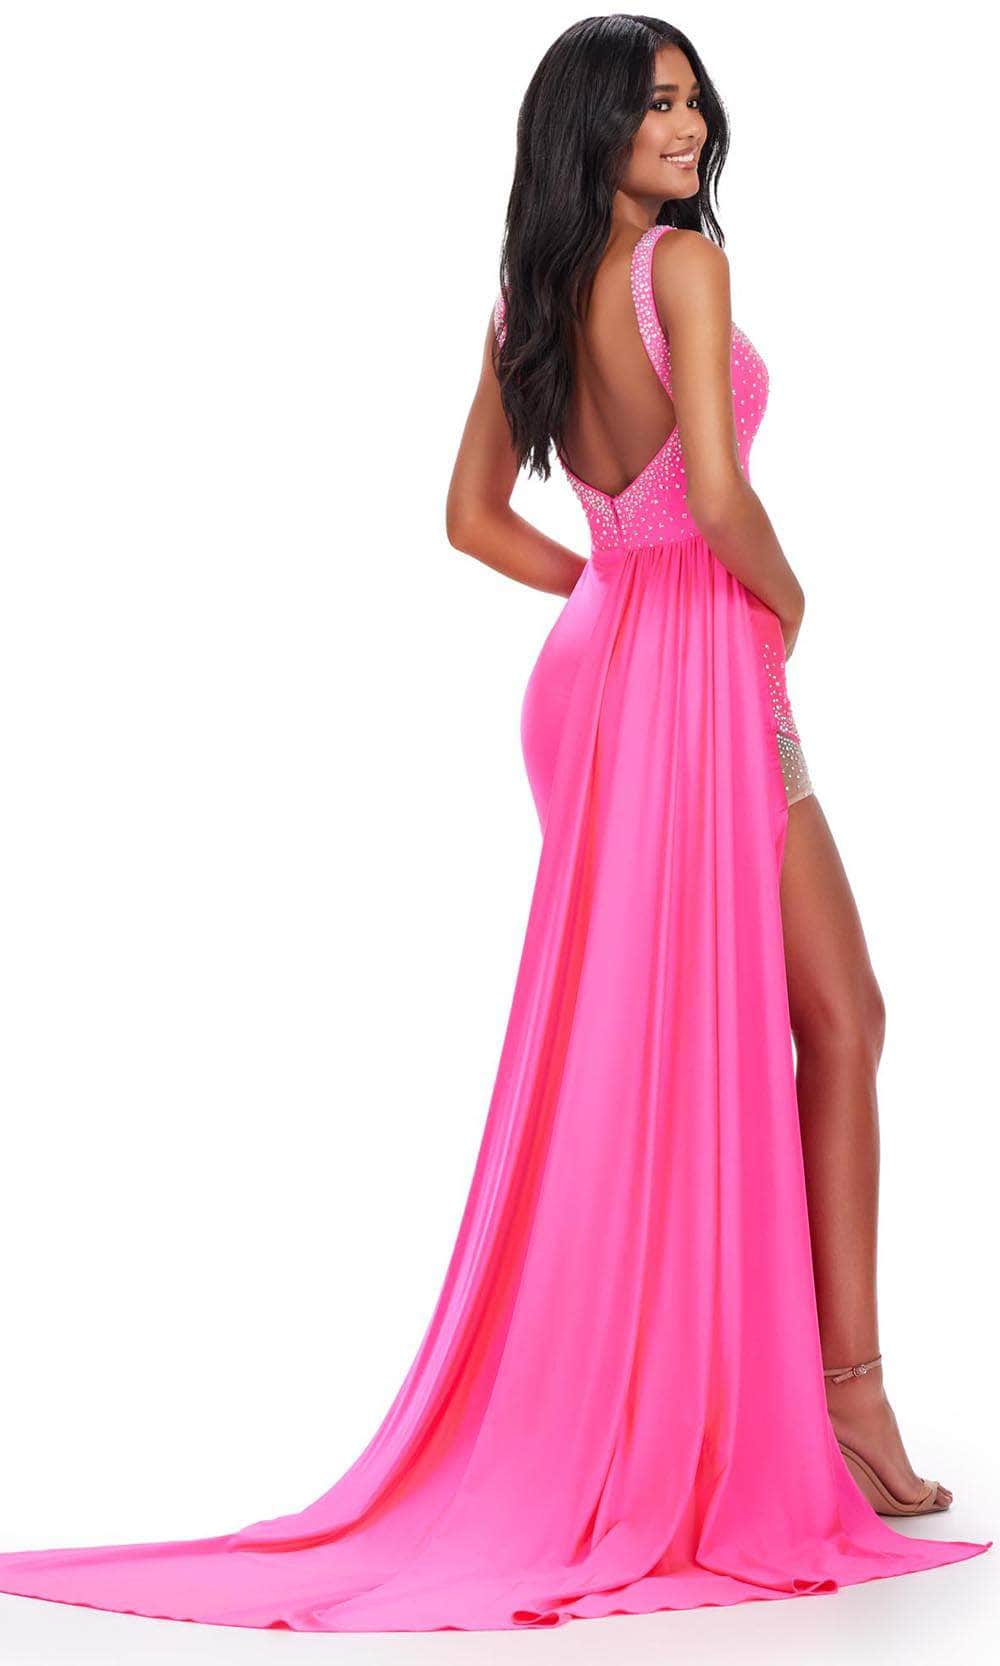 Ashley Lauren 11579 - Plunging Sweetheart Prom Dress Prom Dresses